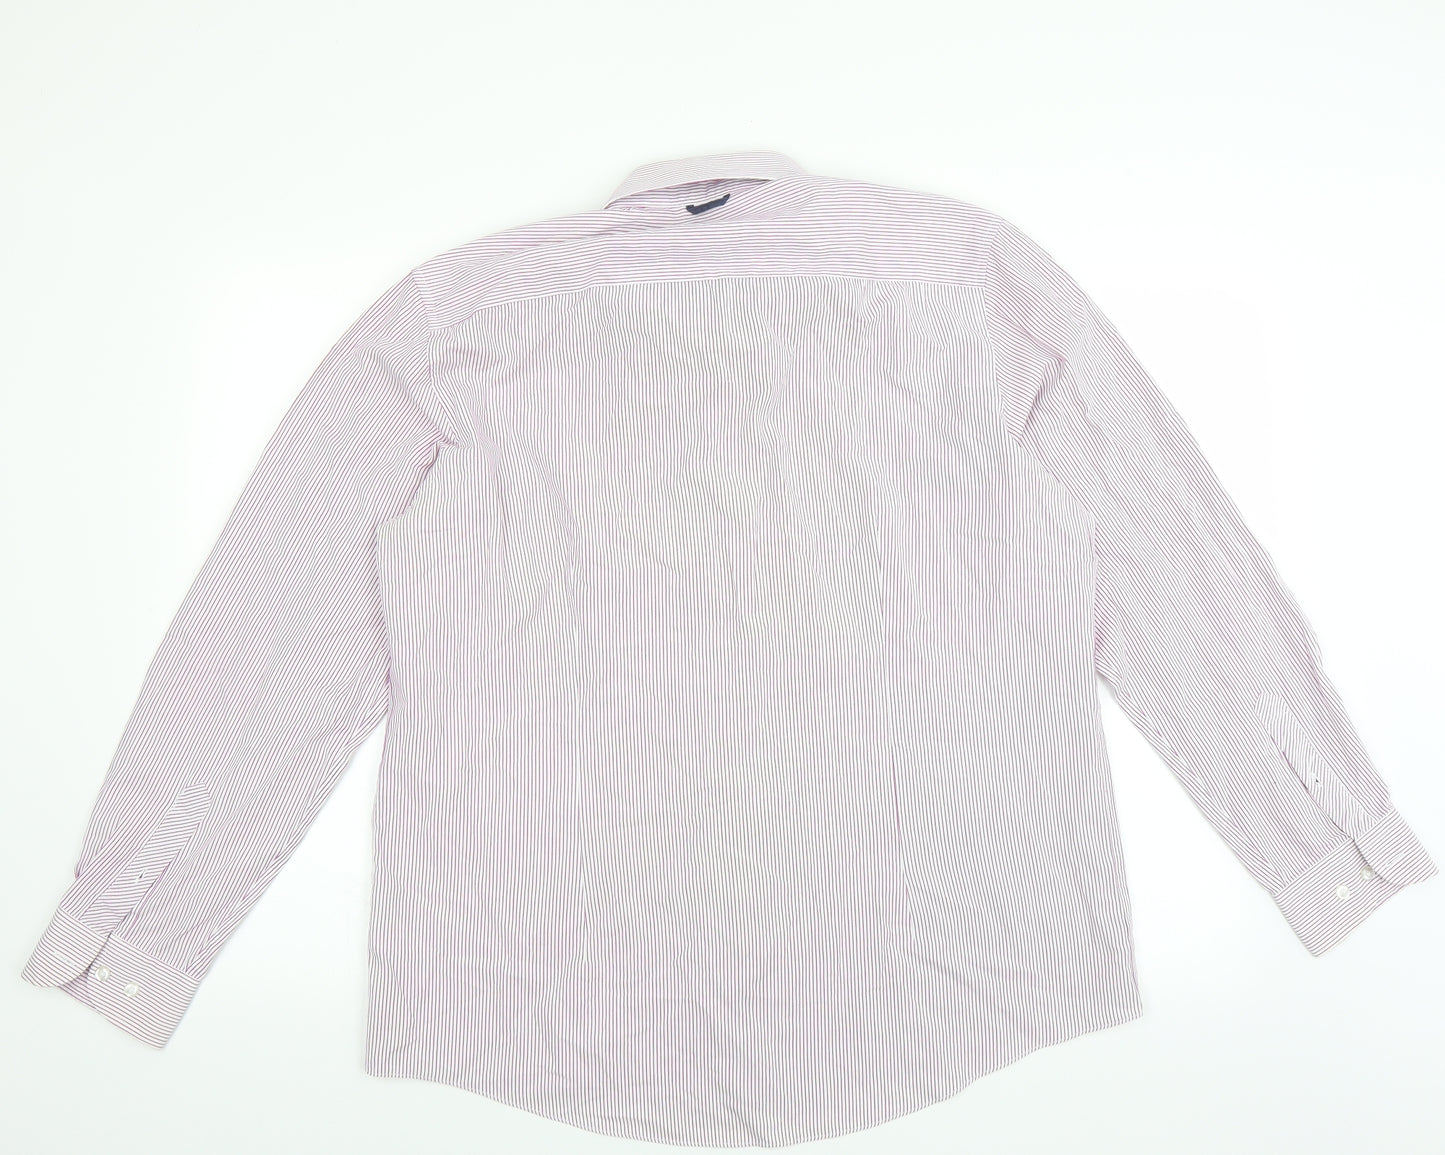 Burton Mens Purple Striped   Dress Shirt Size 16.5  - Tailored fit